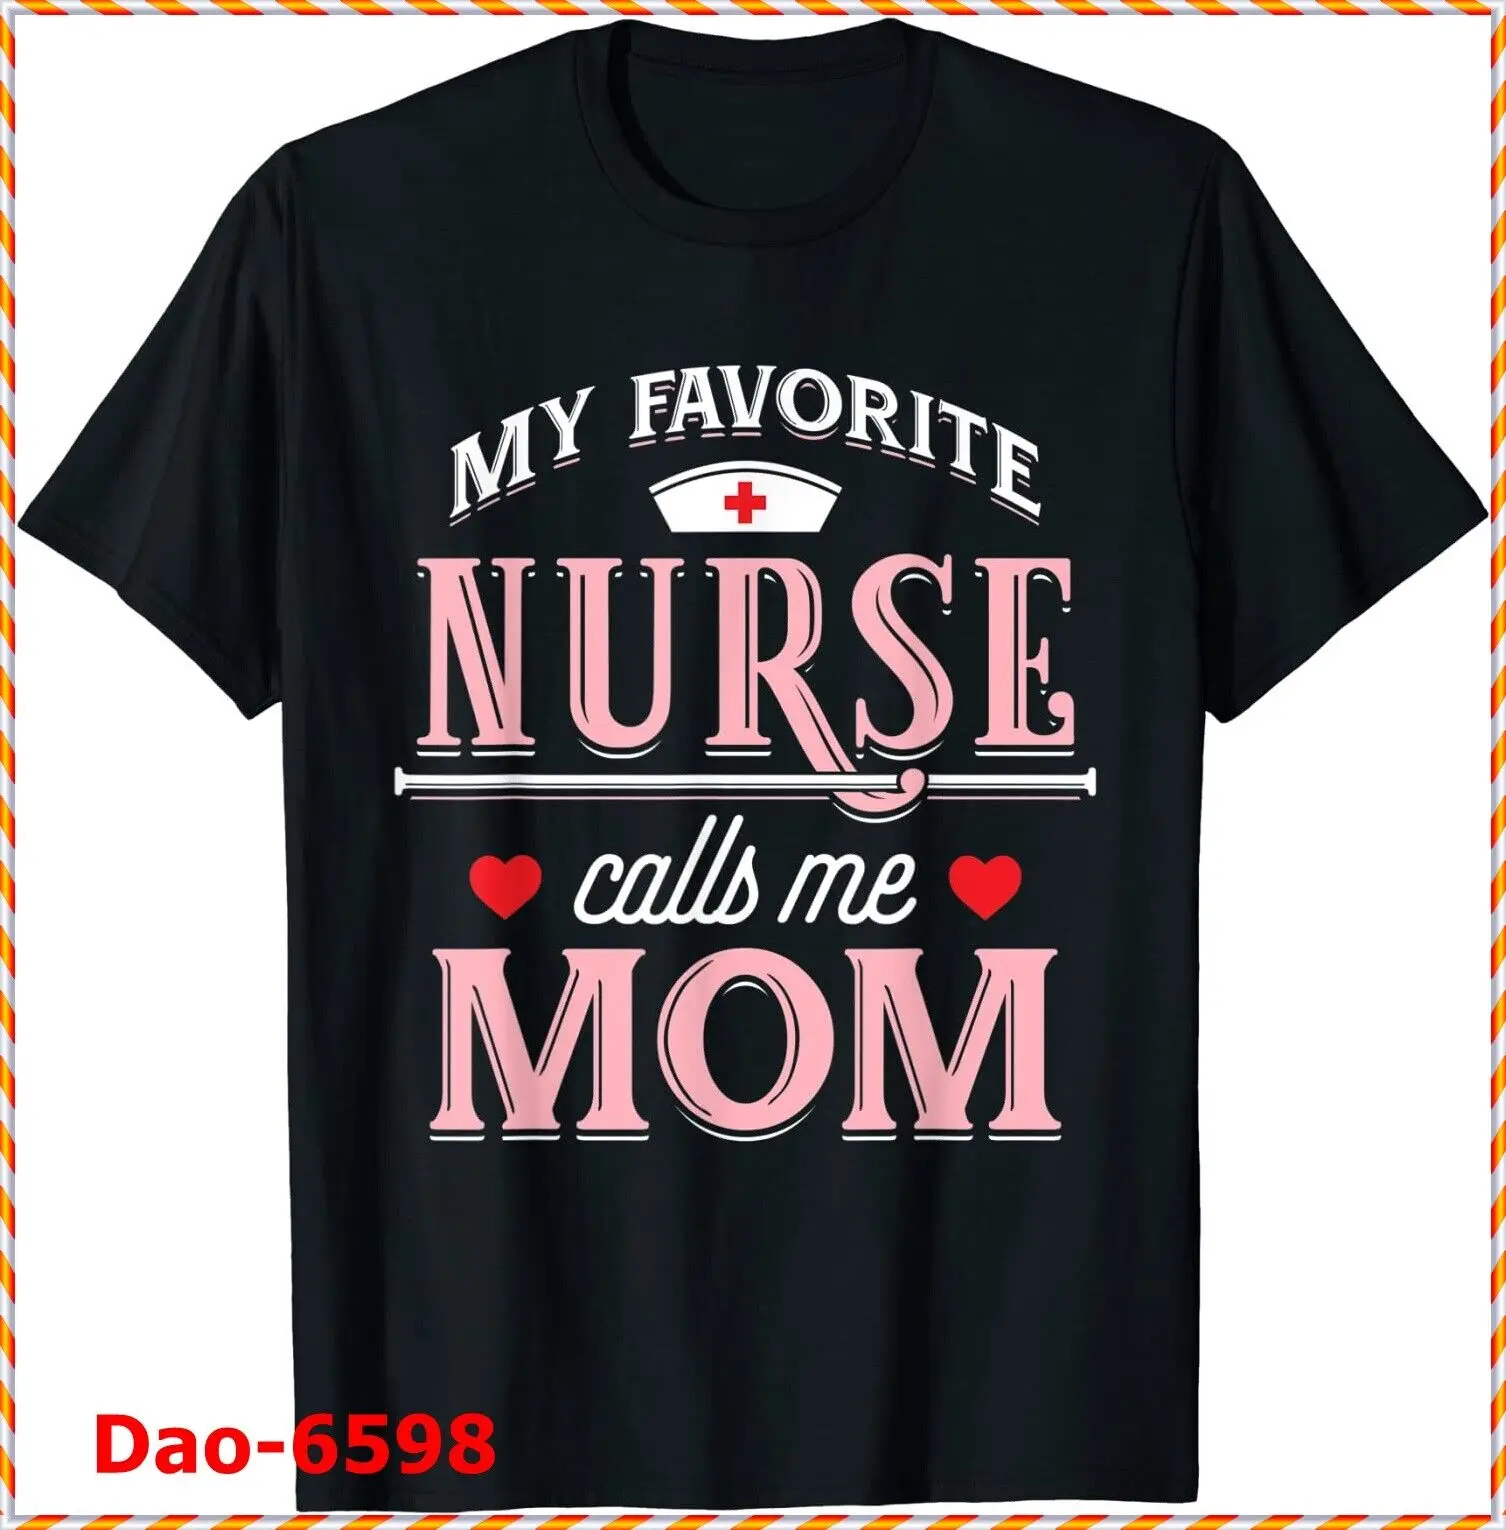 

My Favorite Nurse Calls Me Mom Nurse Fashion Printing Men's Short Sleeve T-shirt Boyfriend Gift Tshirt Tops Hipster Tee